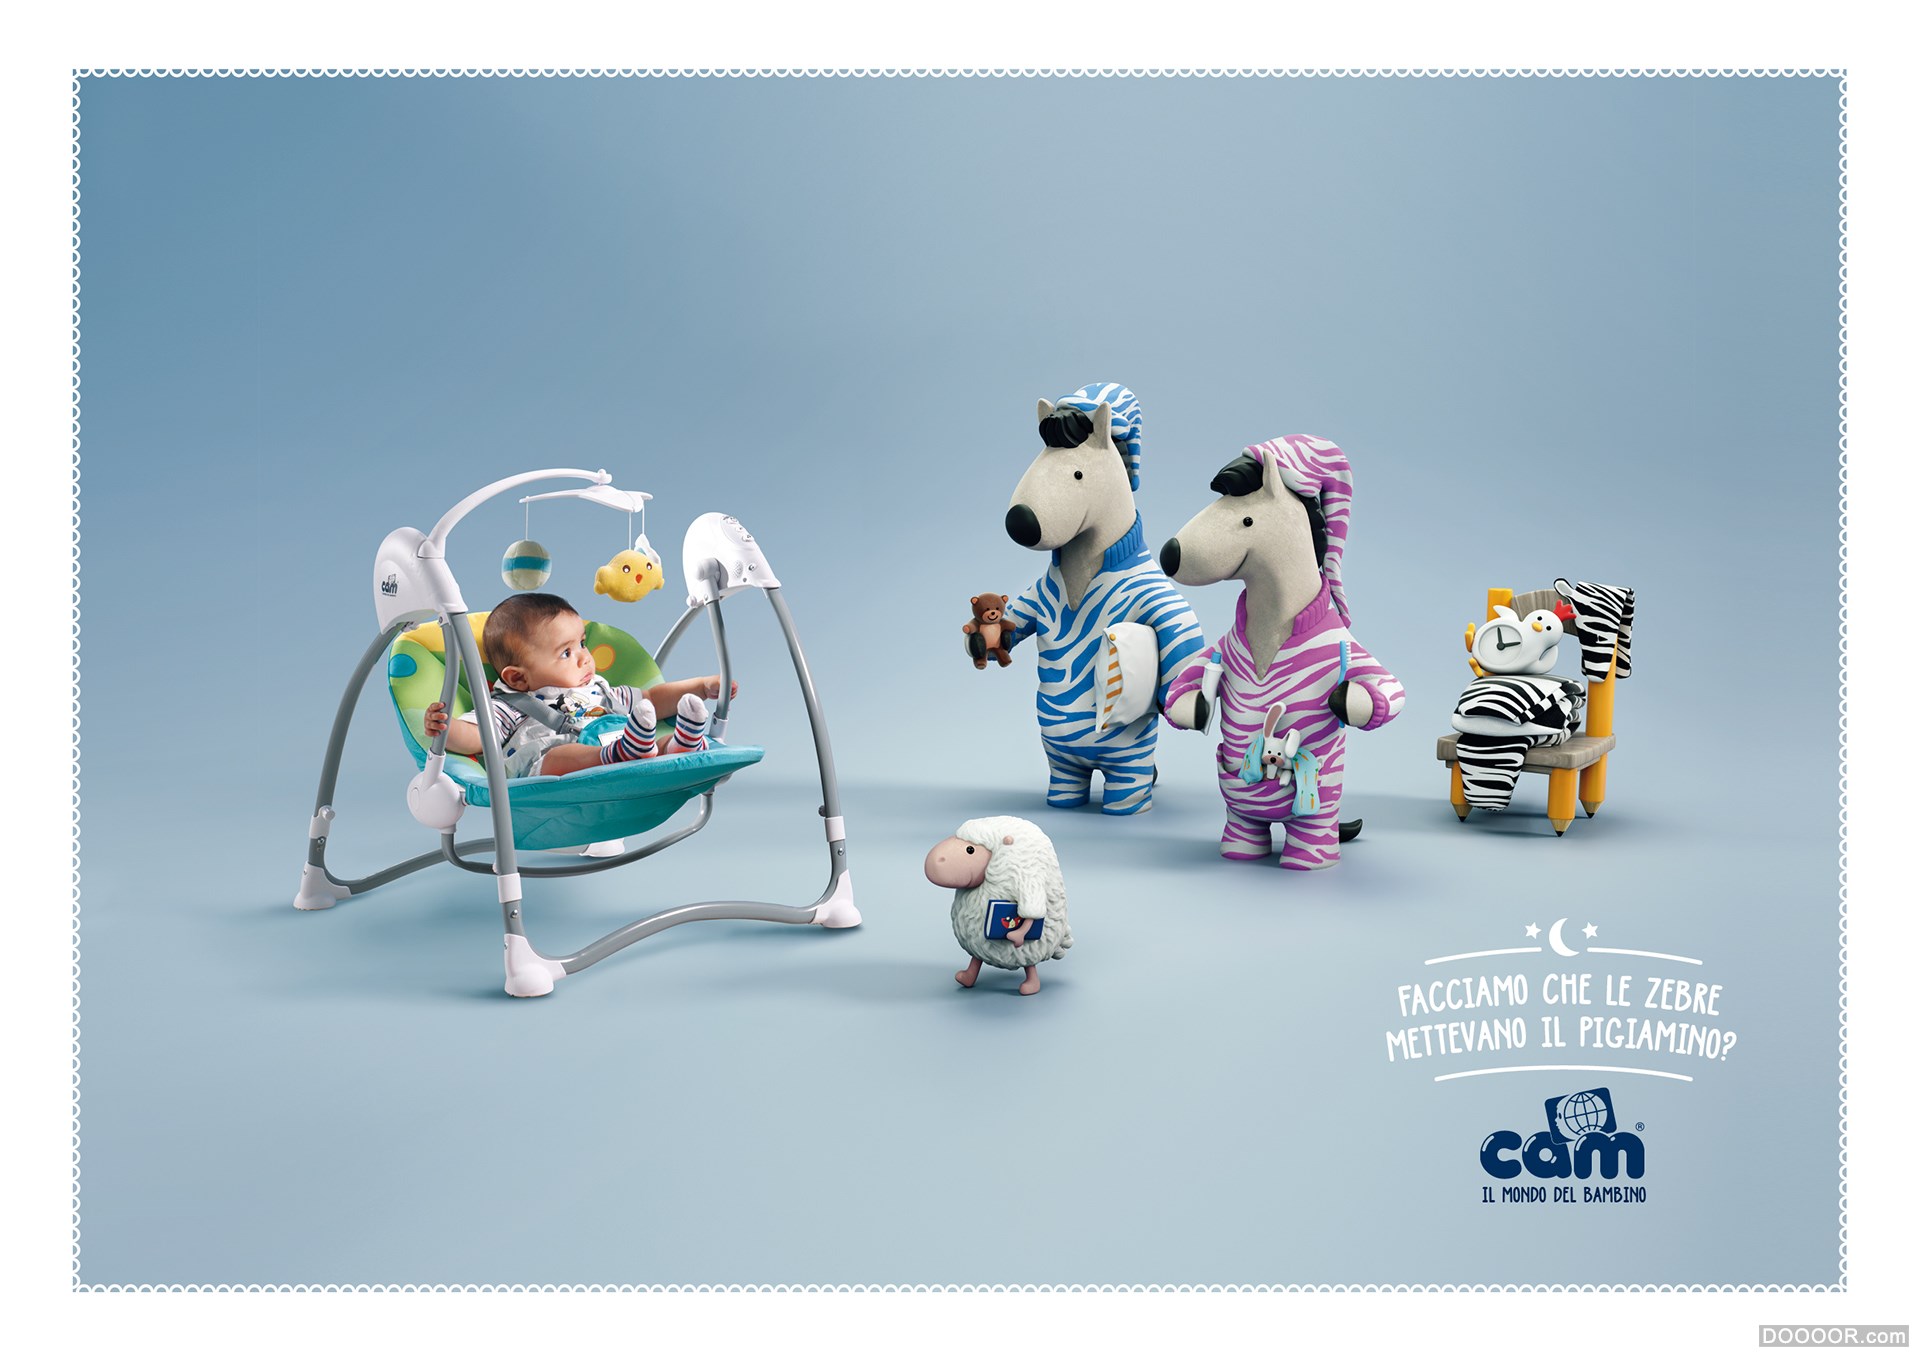 CAM婴童世界创意玩具广告-意大利vincenzo celli [17P] 10.jpg